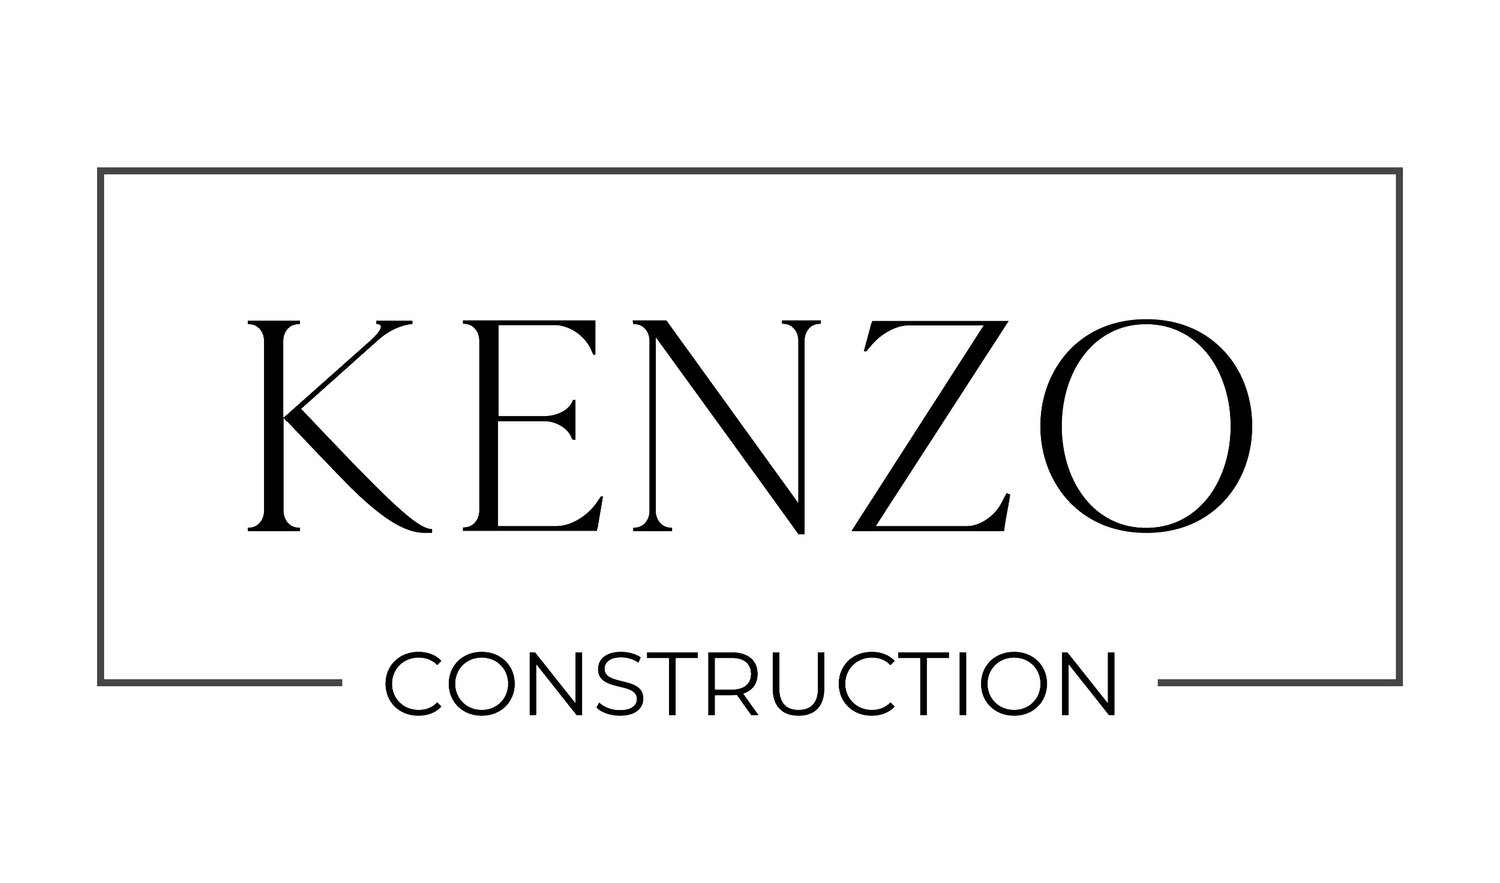 Kenzo Construction